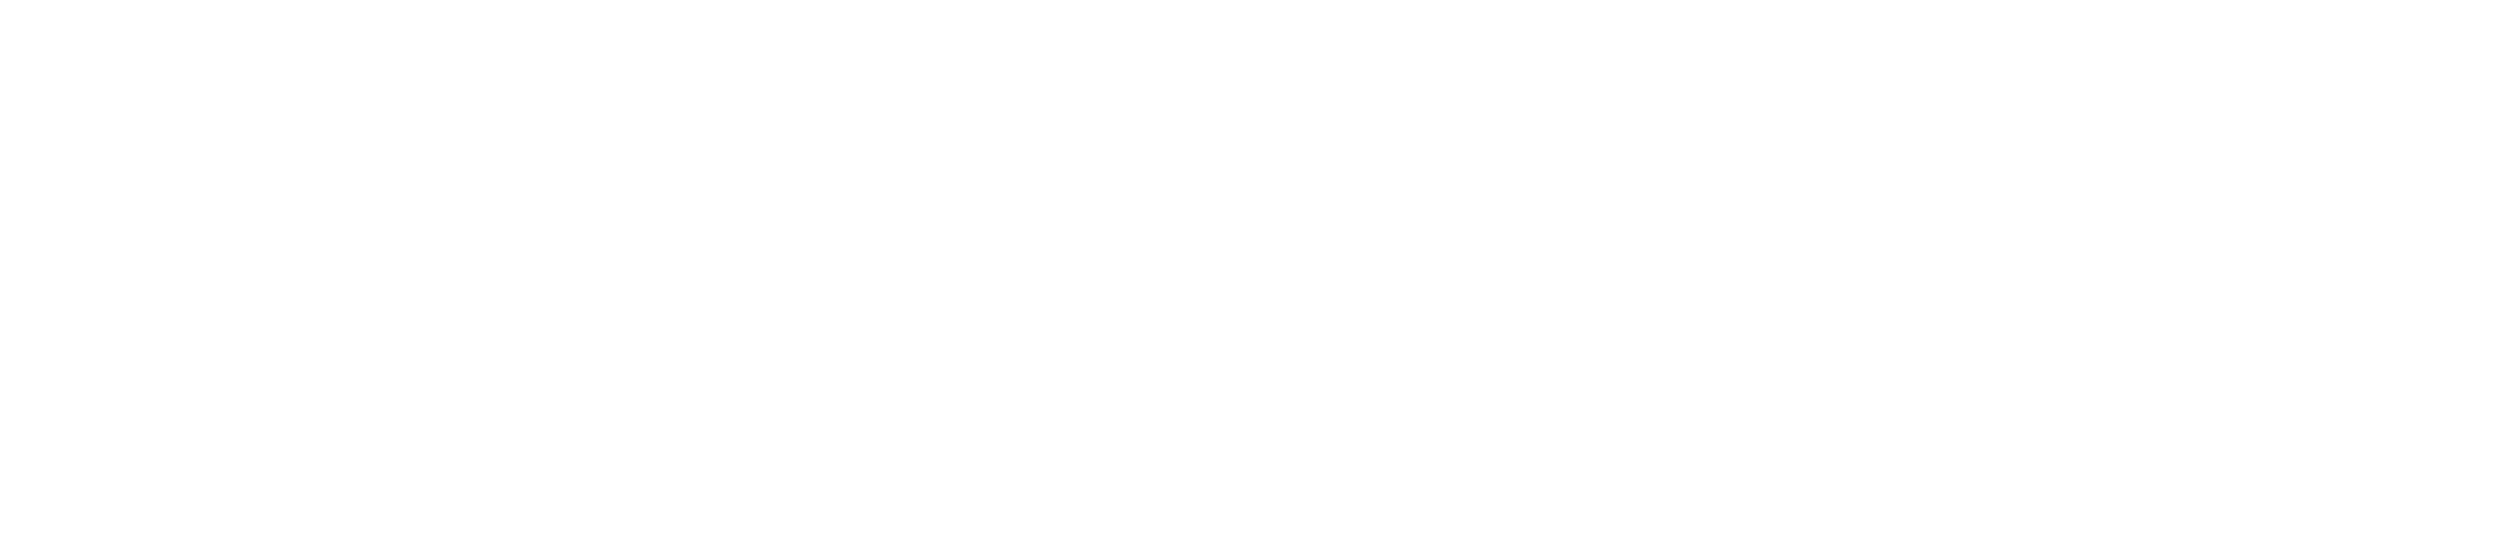 logo iepb project